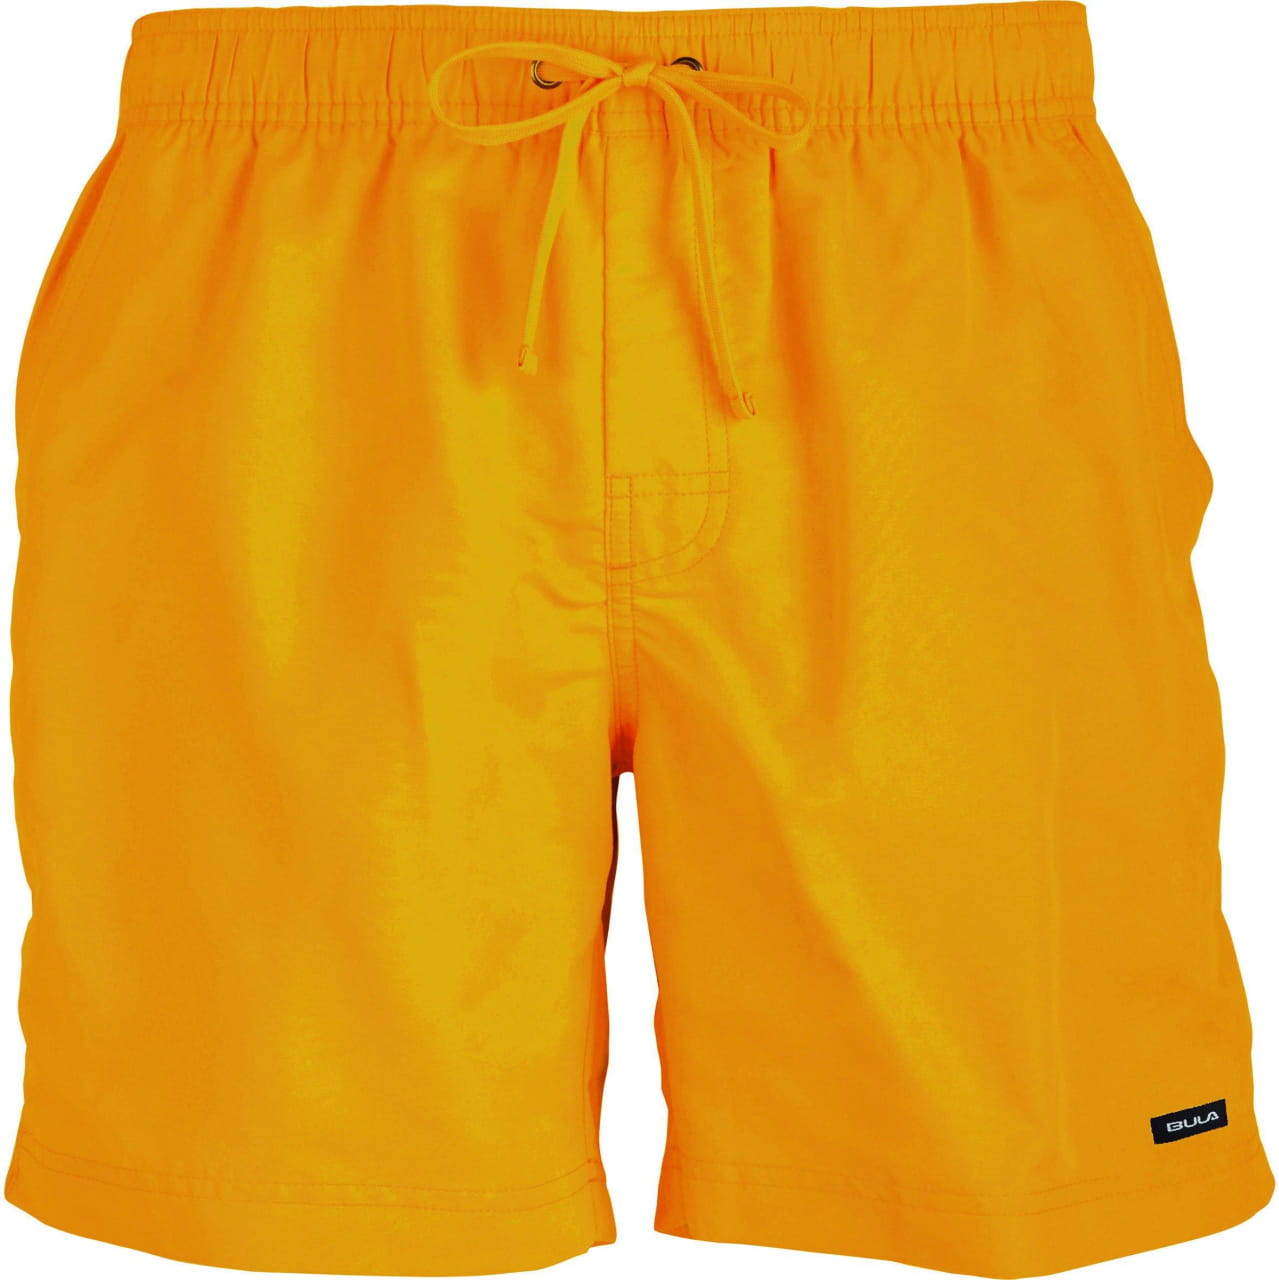 Moške športne hlače Bula Hangout Shorts